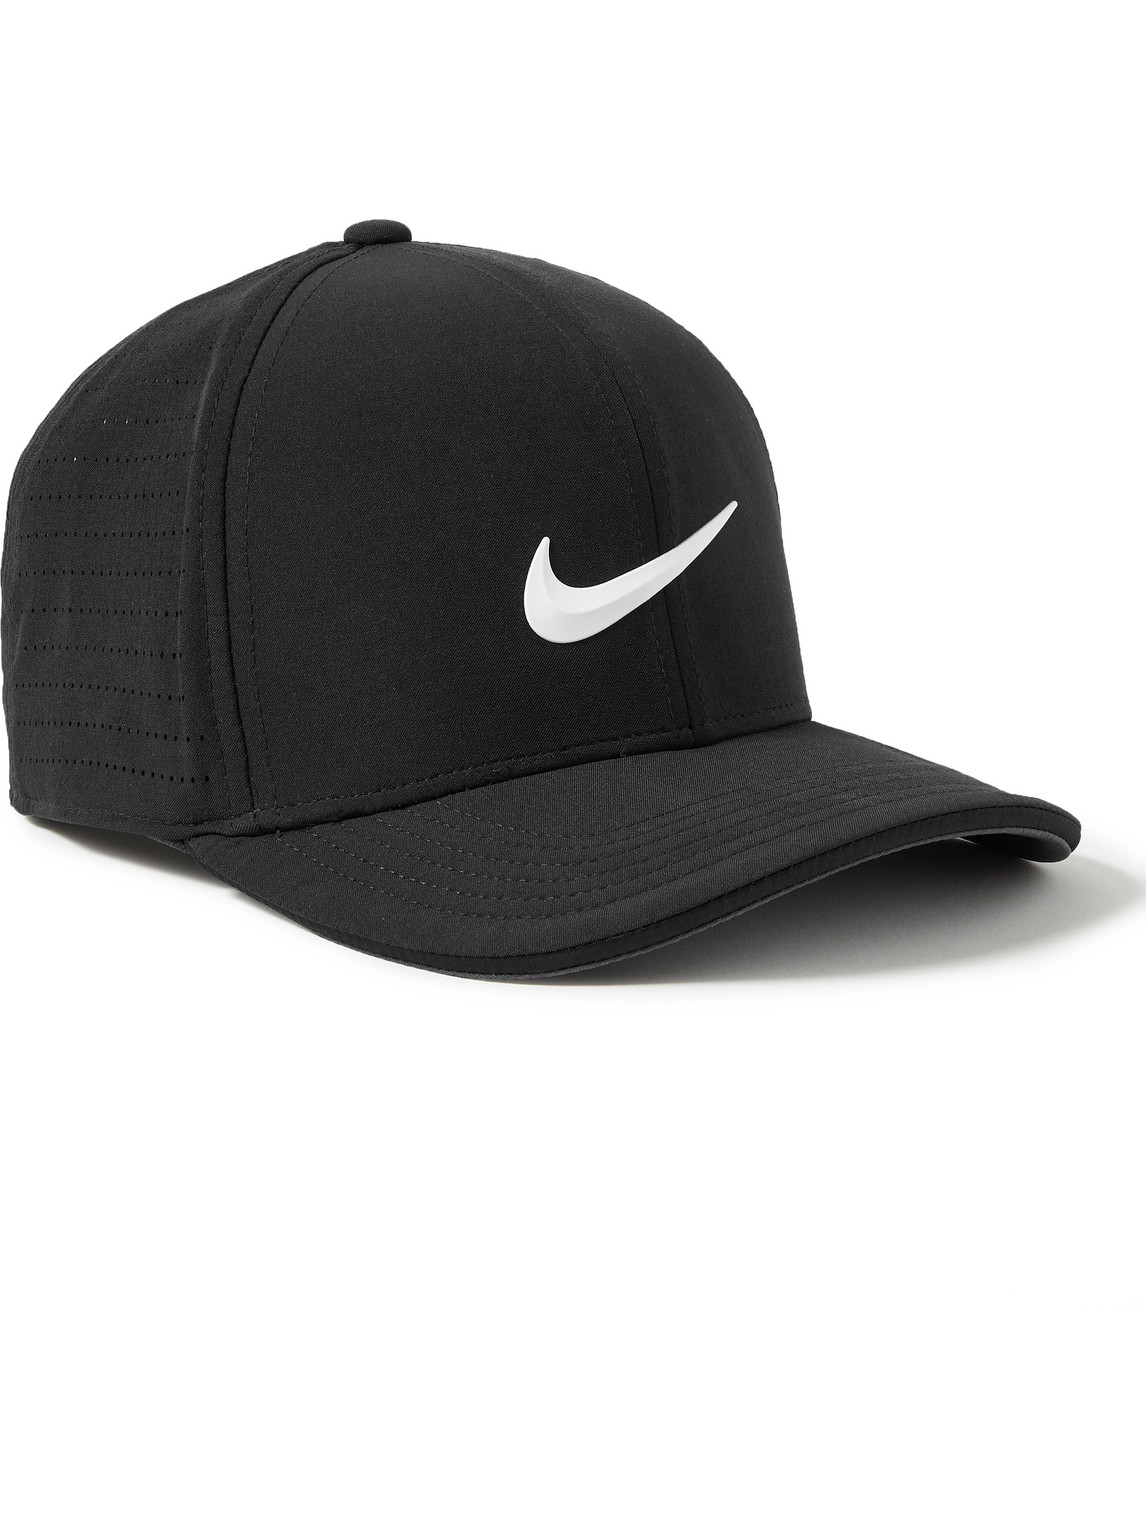 Nike Aerobill Classic99 Perforated Dri-fit Adv Golf Cap In Black | ModeSens